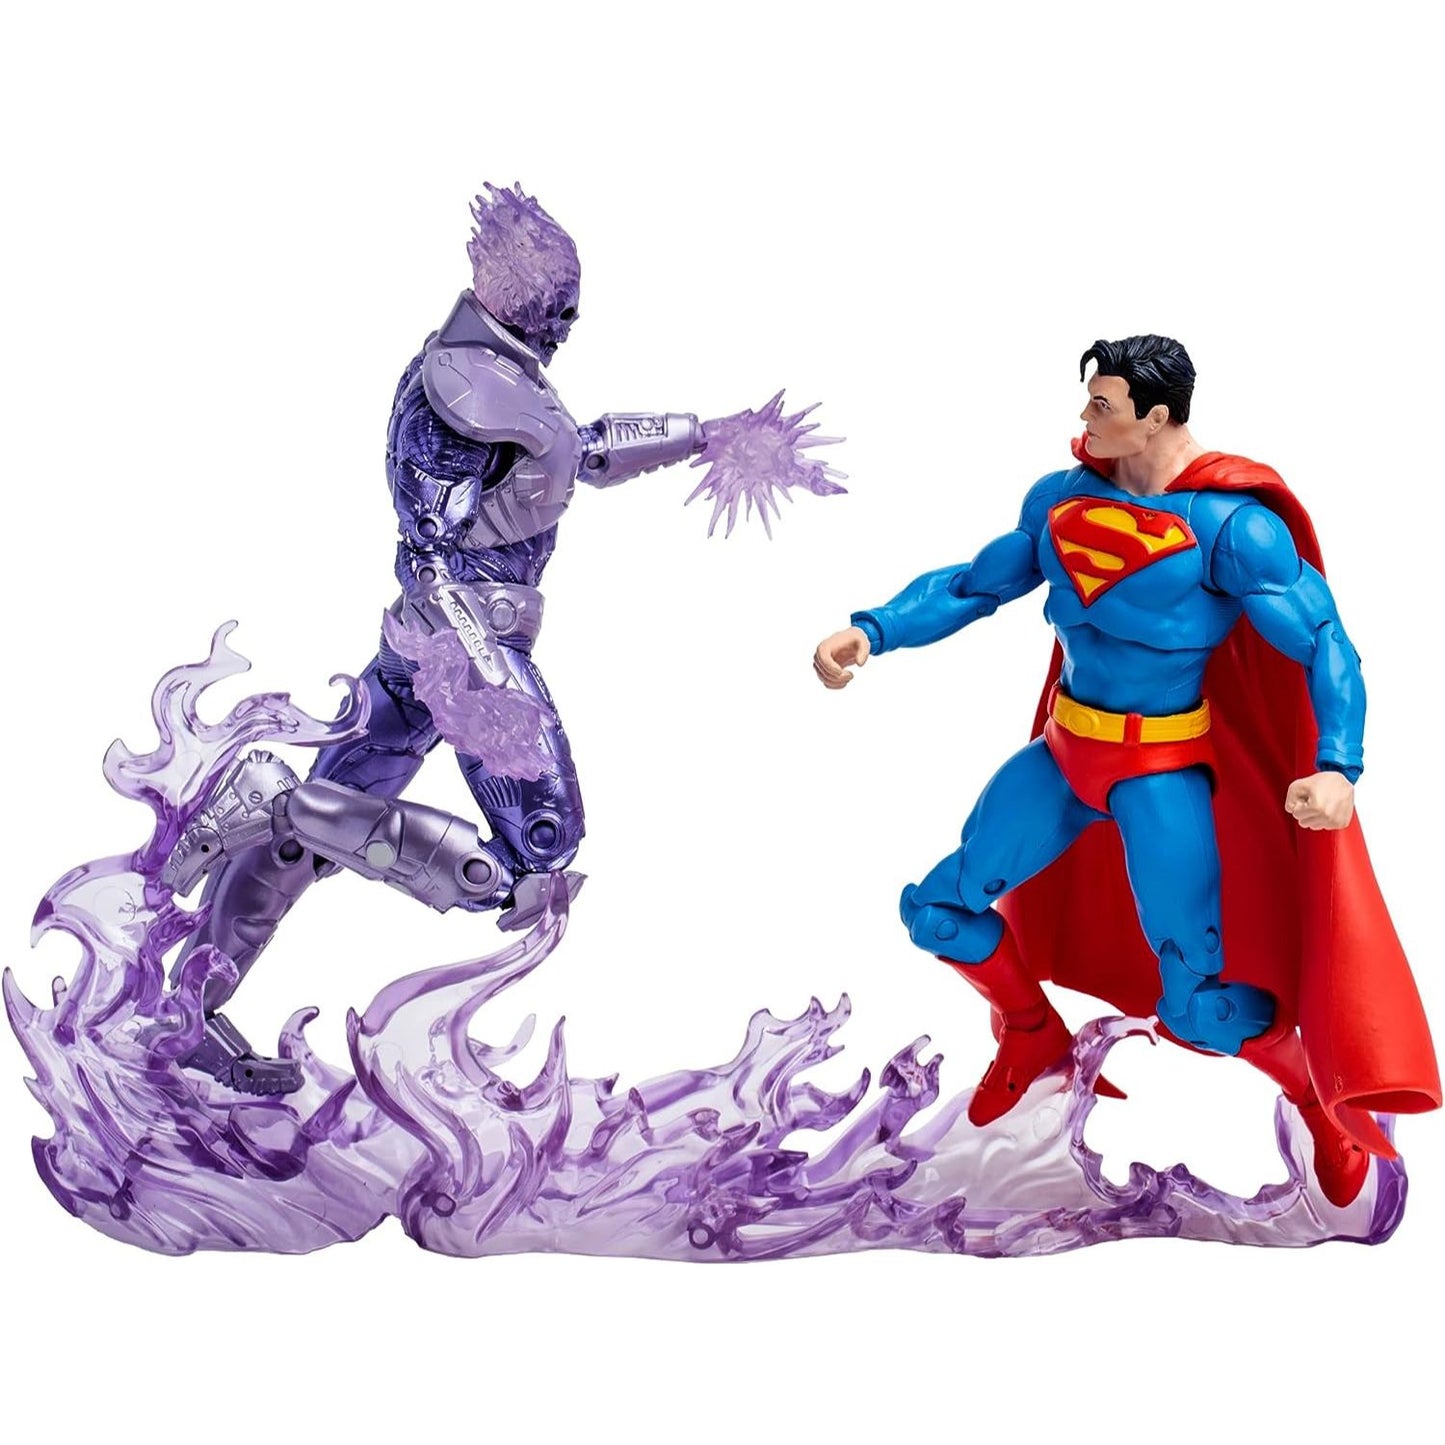 DC Multiverse Atomic Skull vs. Superman 2-Pack Action Figure Toy, Gold Label - Heretoserveyou